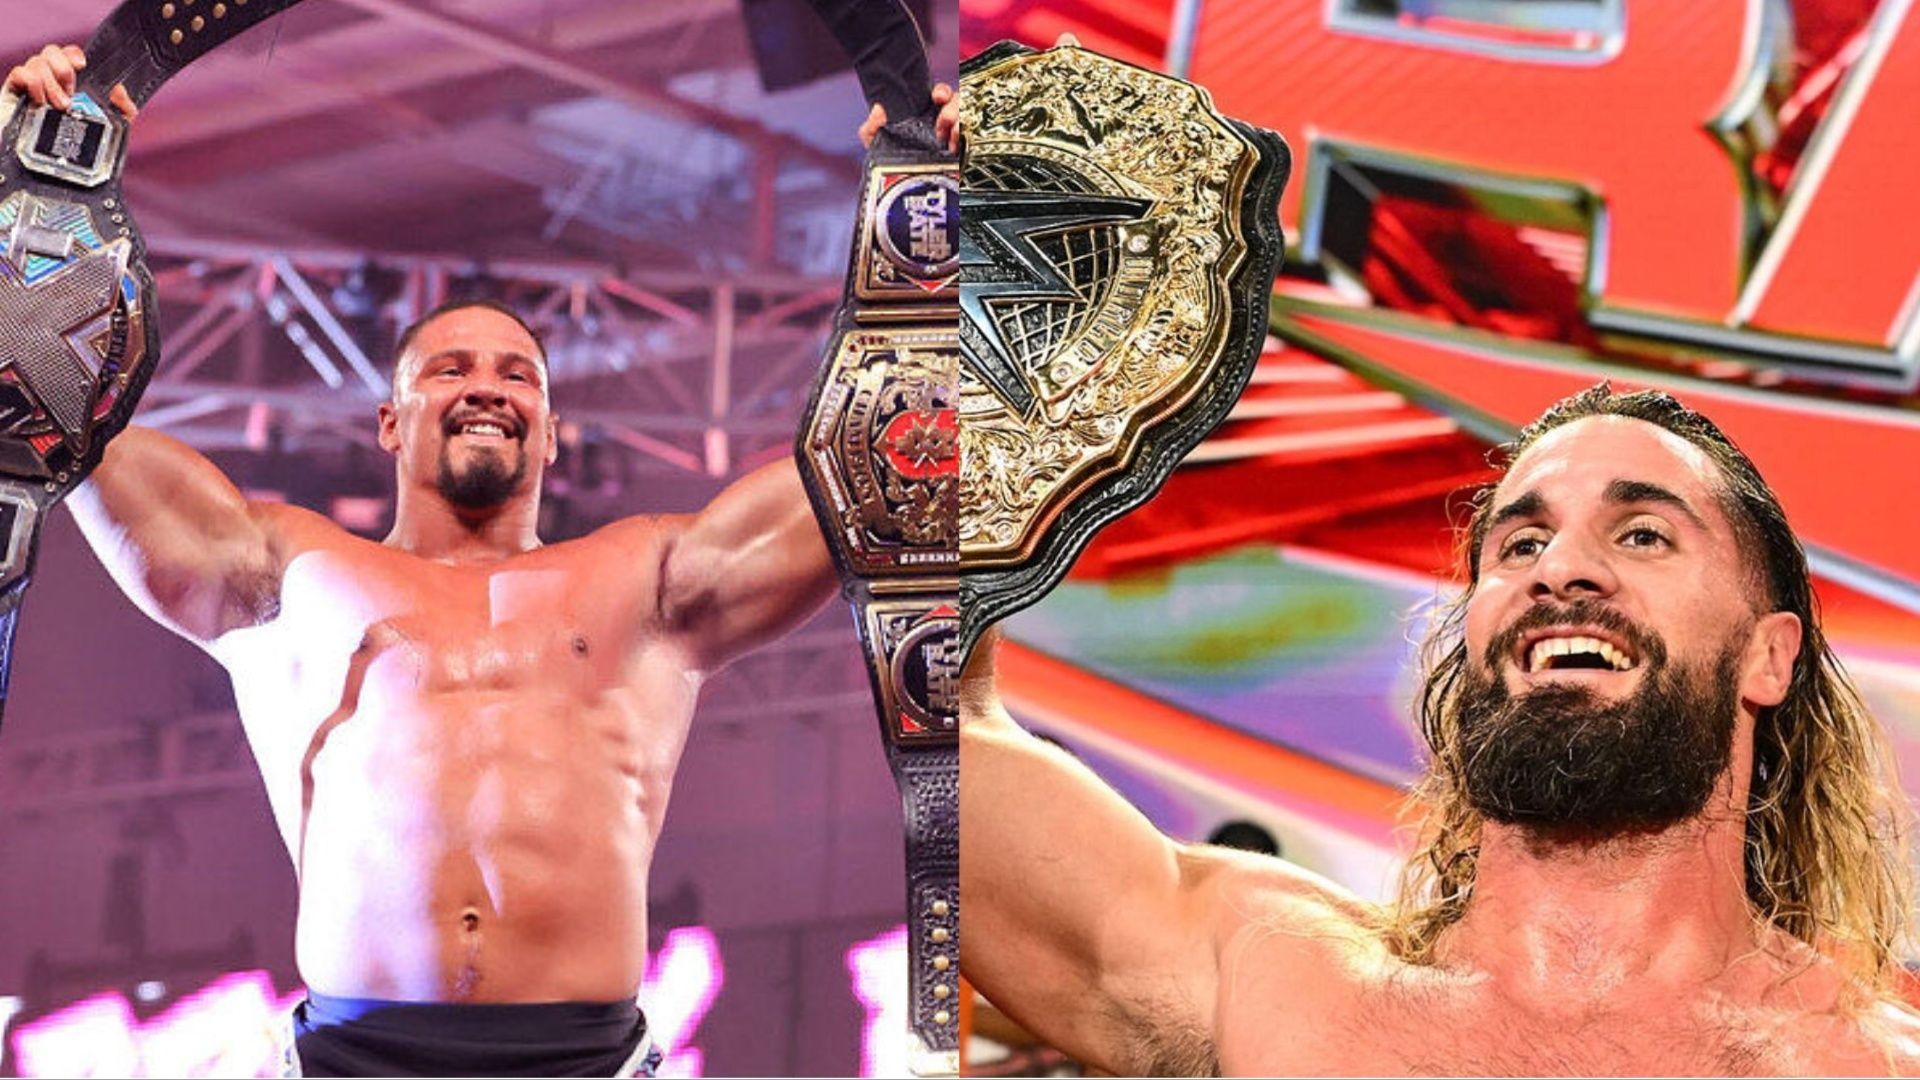 Bron Breakker wants Seth Rollins in a World Heavyweight Championship match.